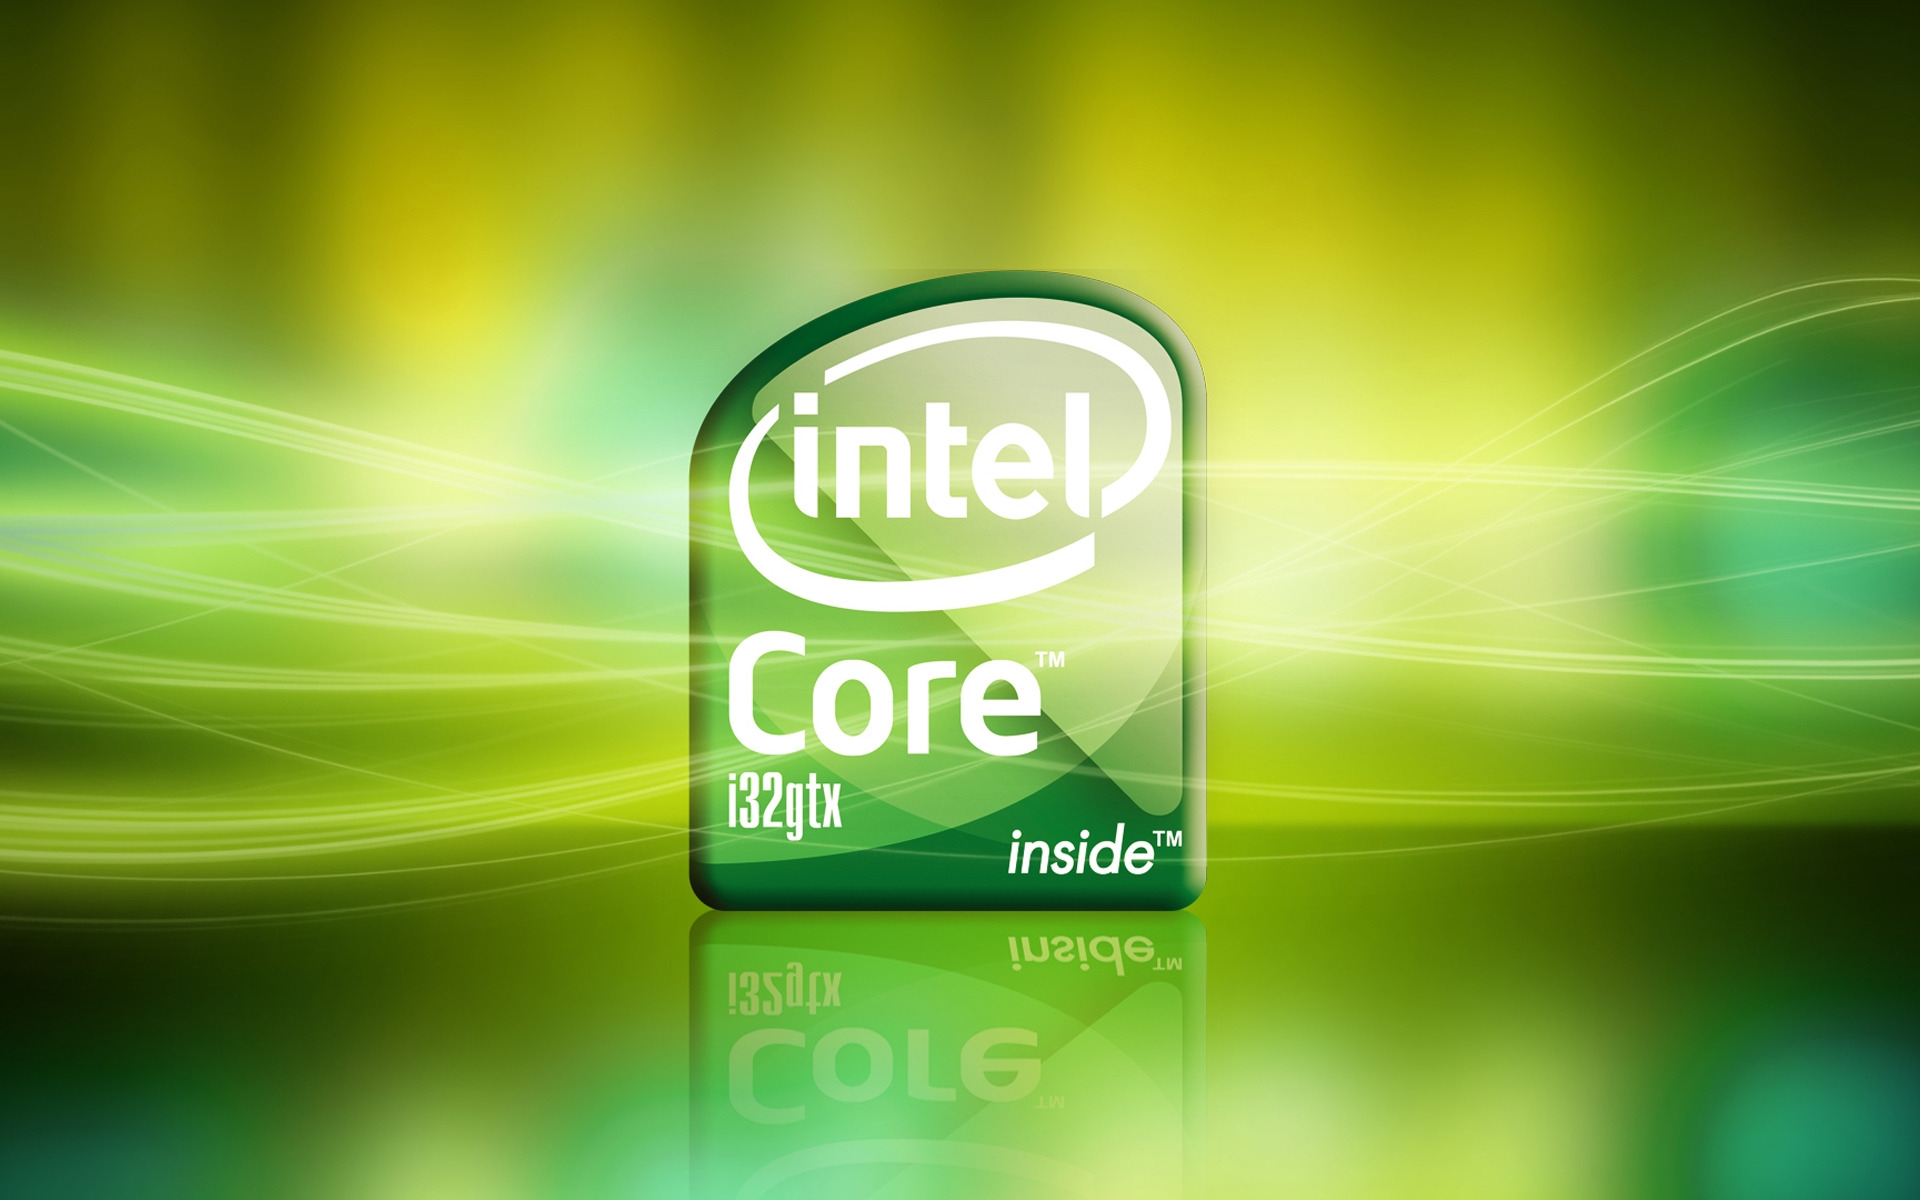 Intel Core i32gtx for 1920 x 1200 widescreen resolution